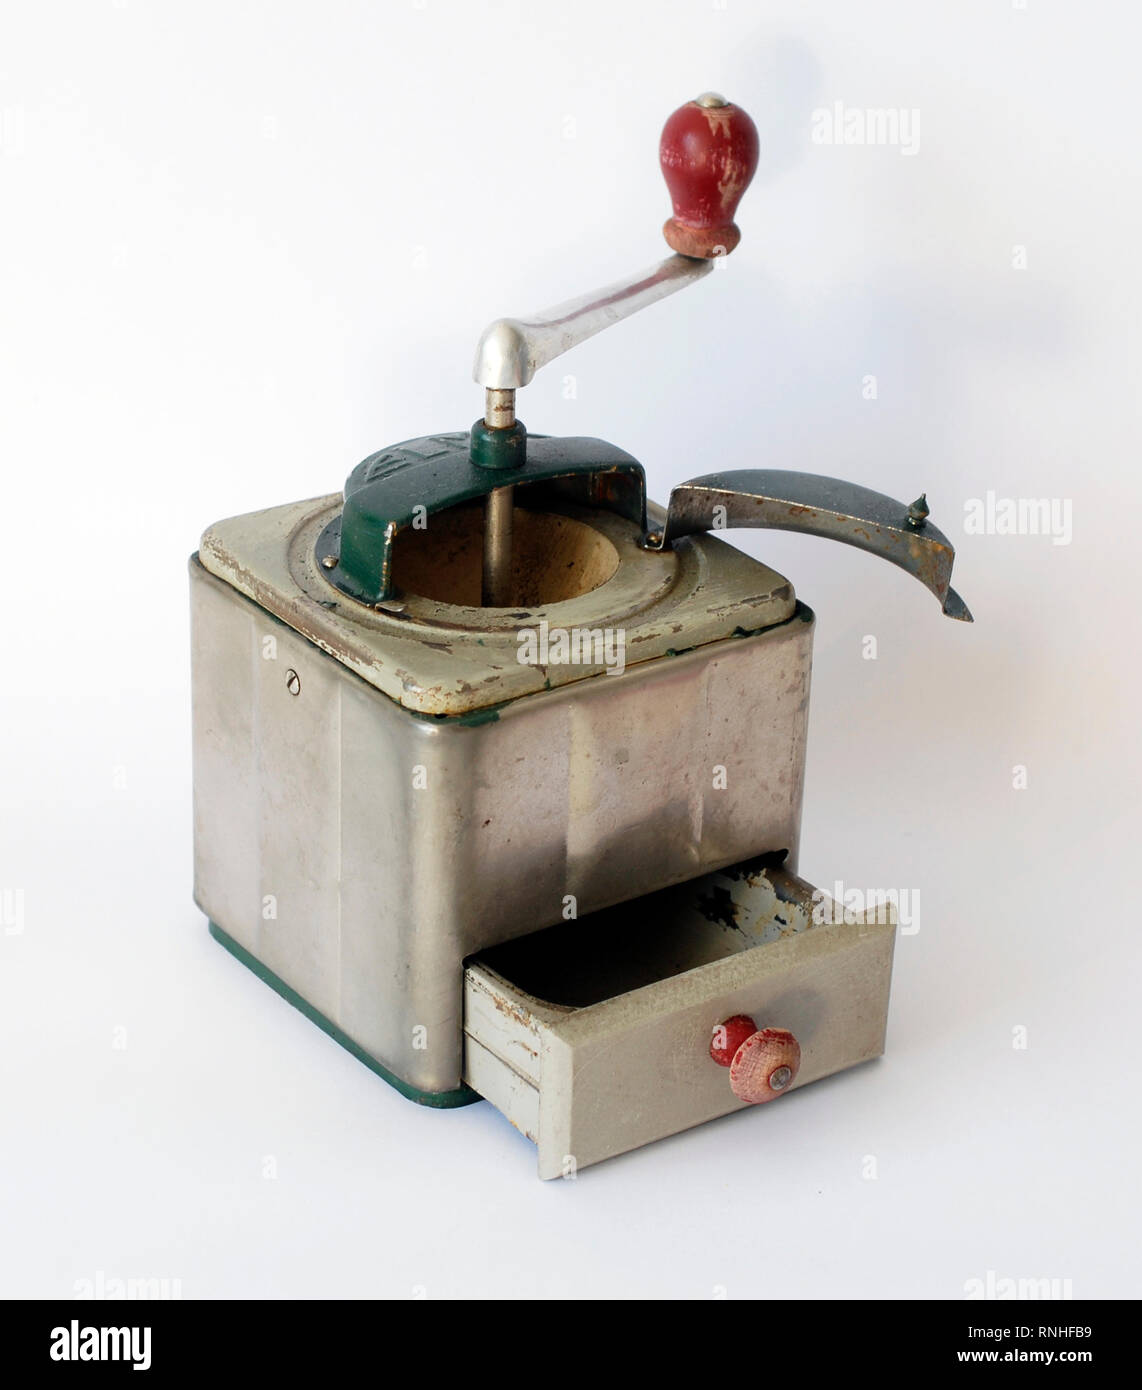 Vintage metal grinder for coffee, Elma brand, Made in Spain Stock Photo